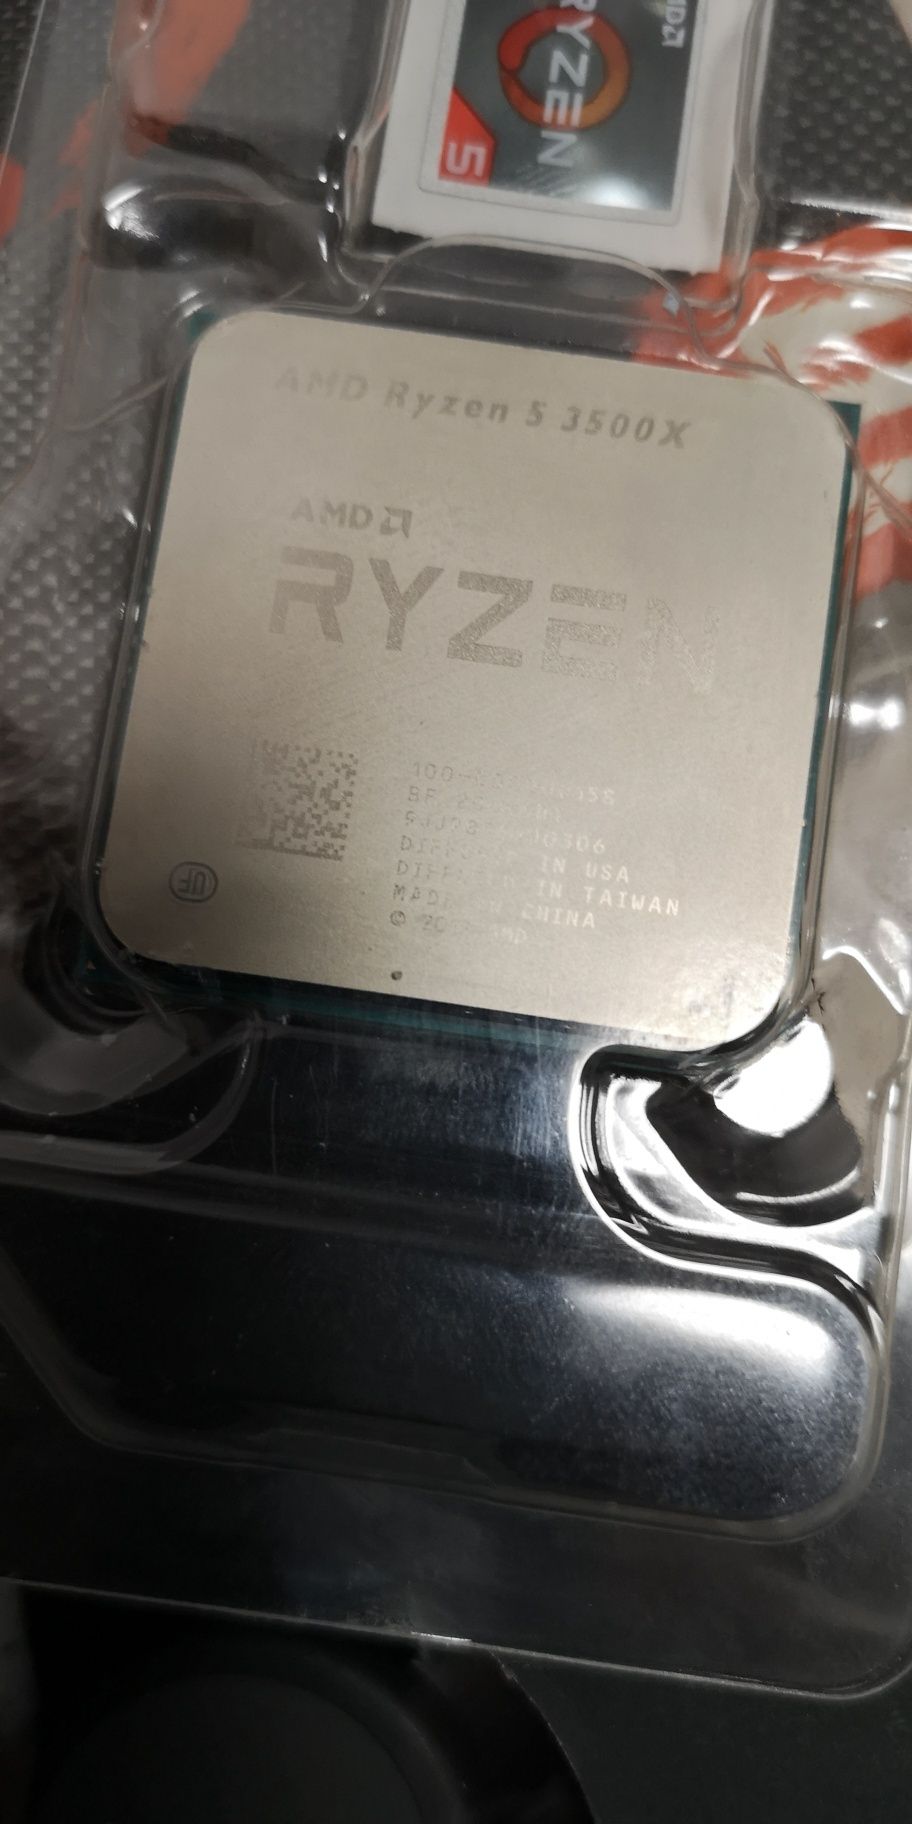 AMD Ryzen 5 3500x.